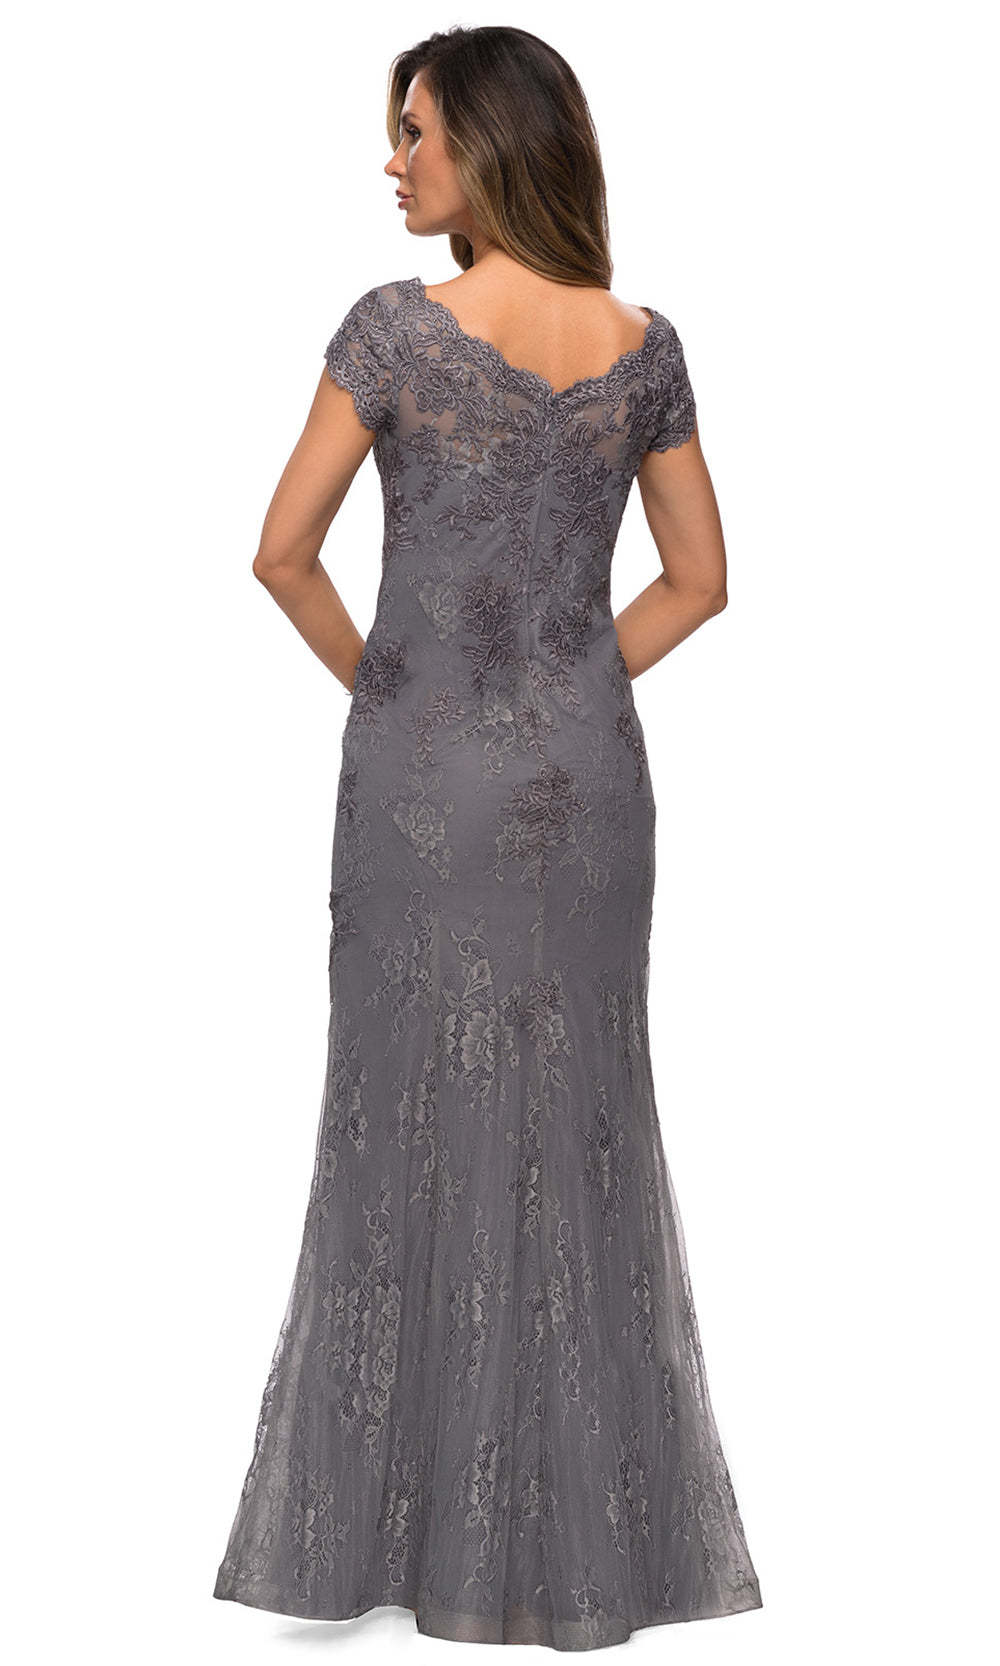 La Femme - 28099 Crystal Beaded Lace Trumpet Formal Dress In Silver & Gray